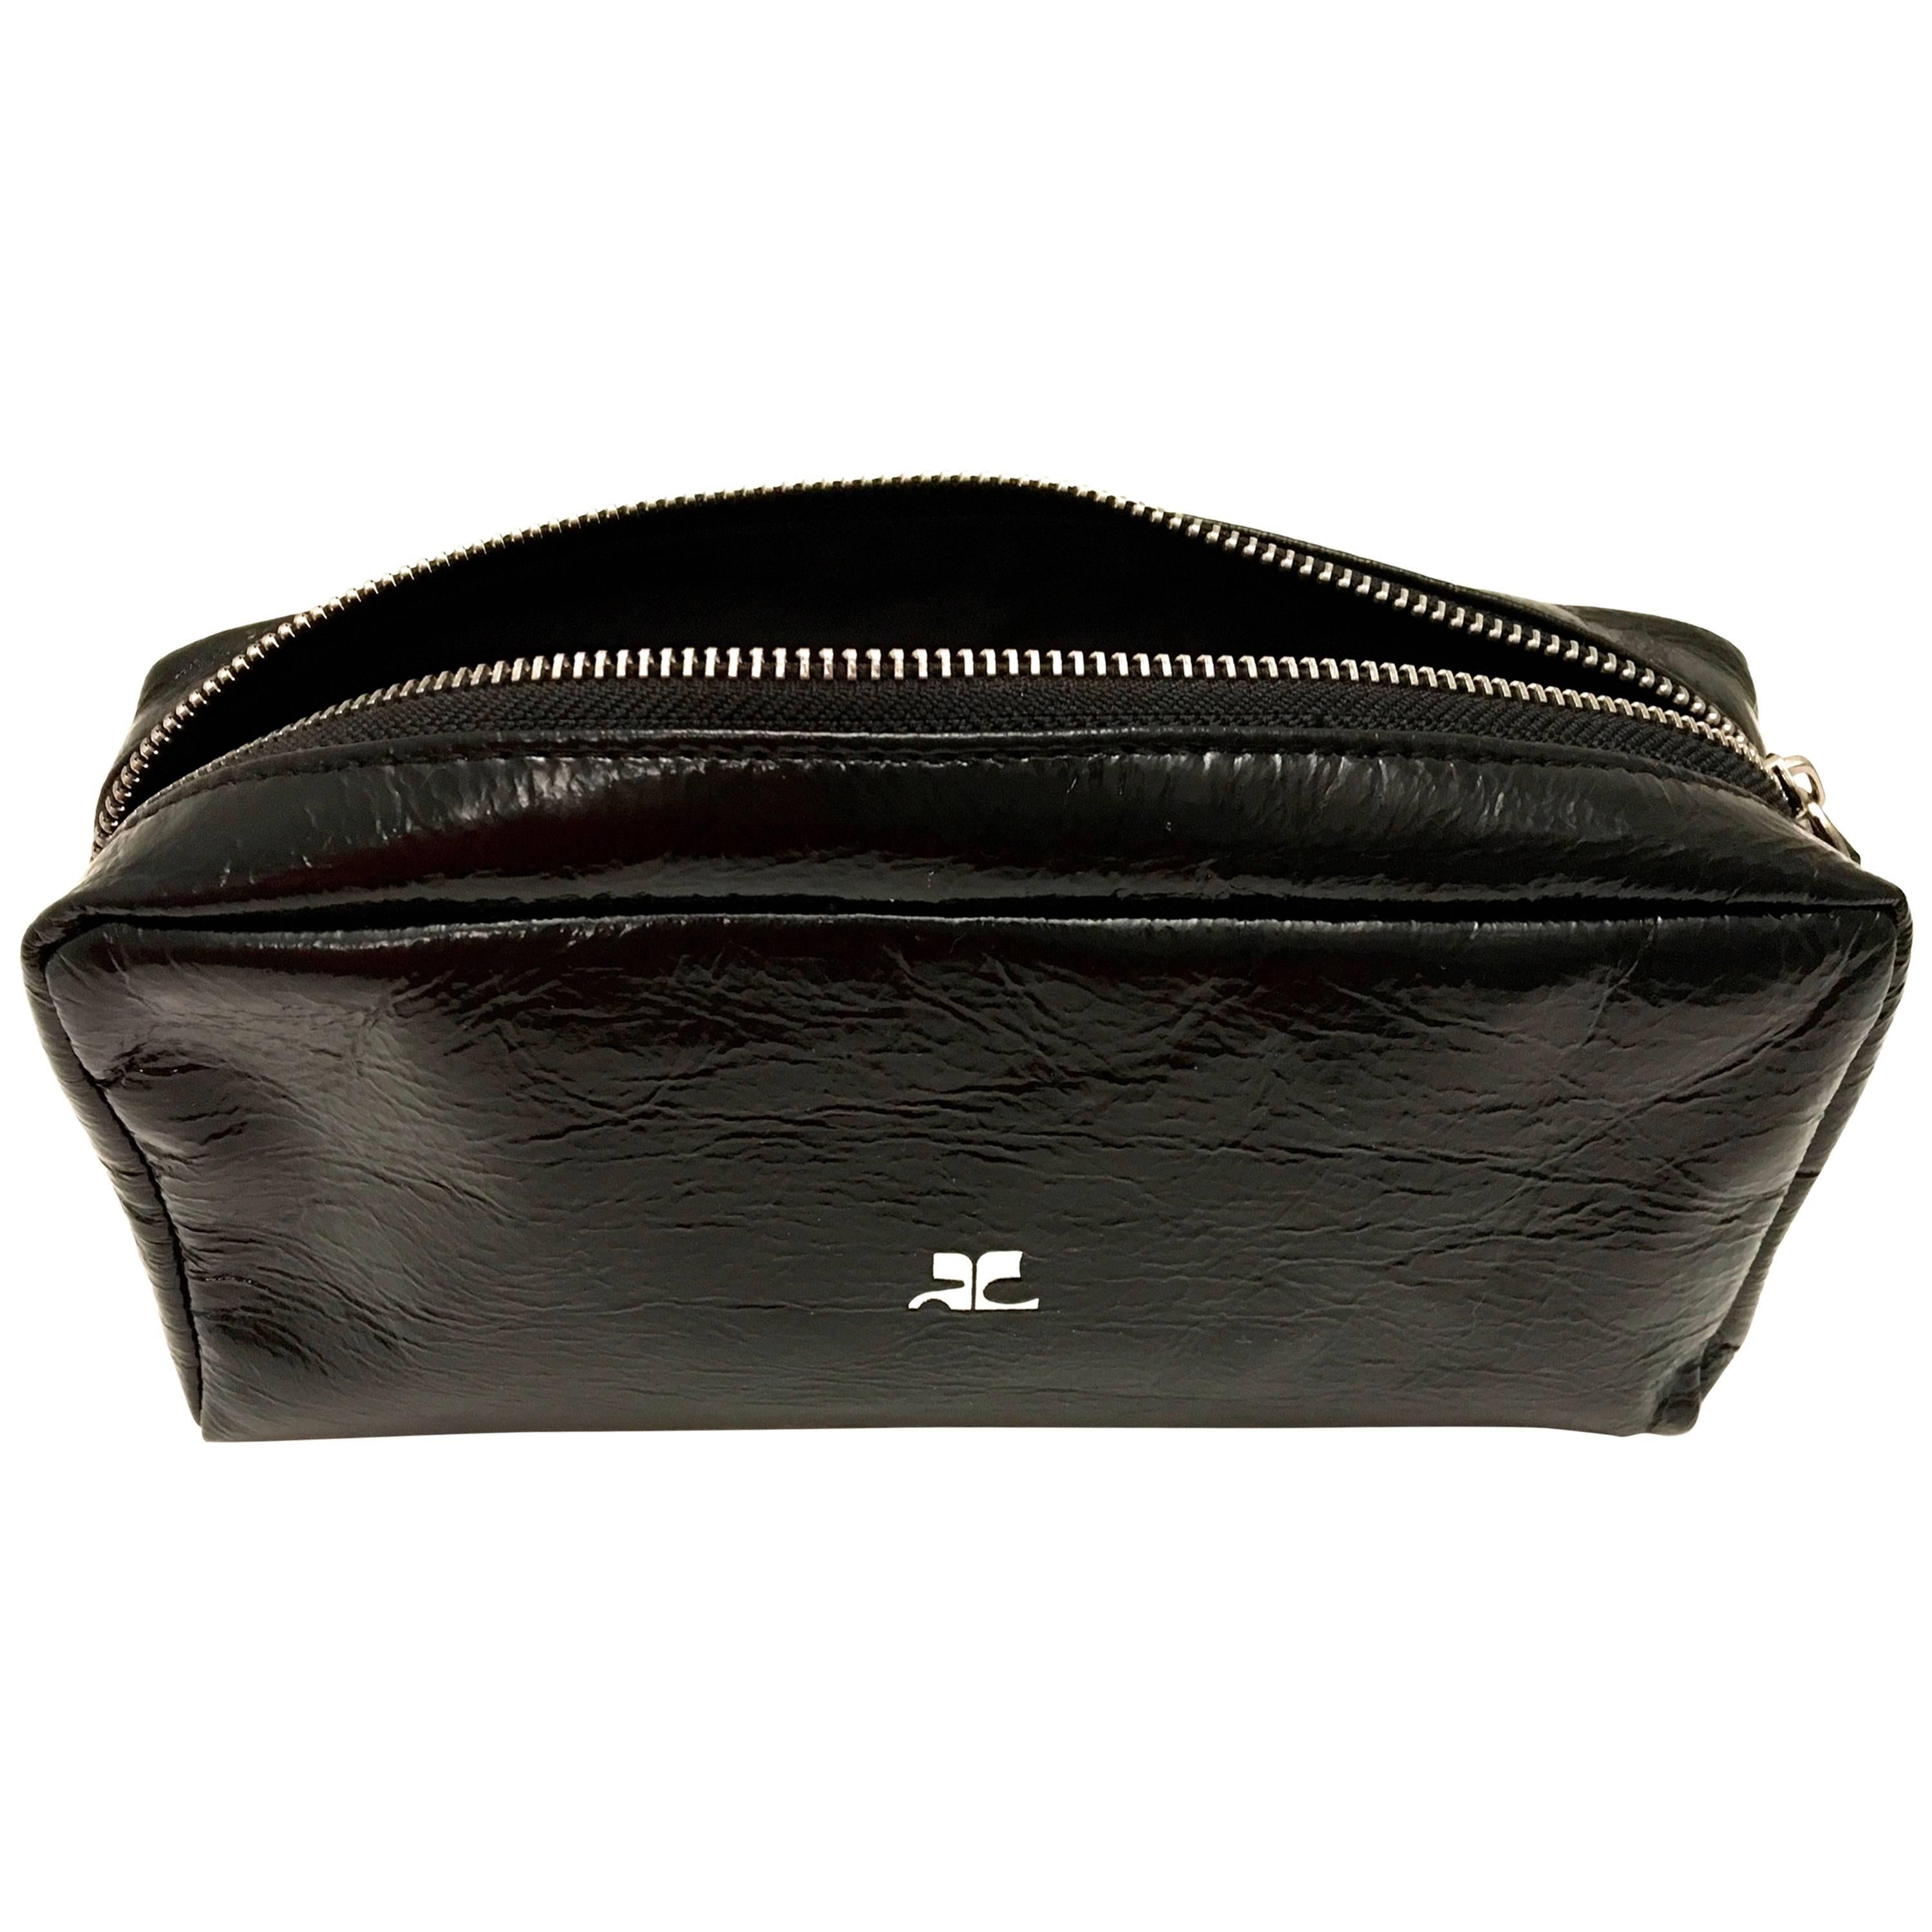 Courreges Bag - Black - Patent Leather - Makeup / Accessory - New For Sale